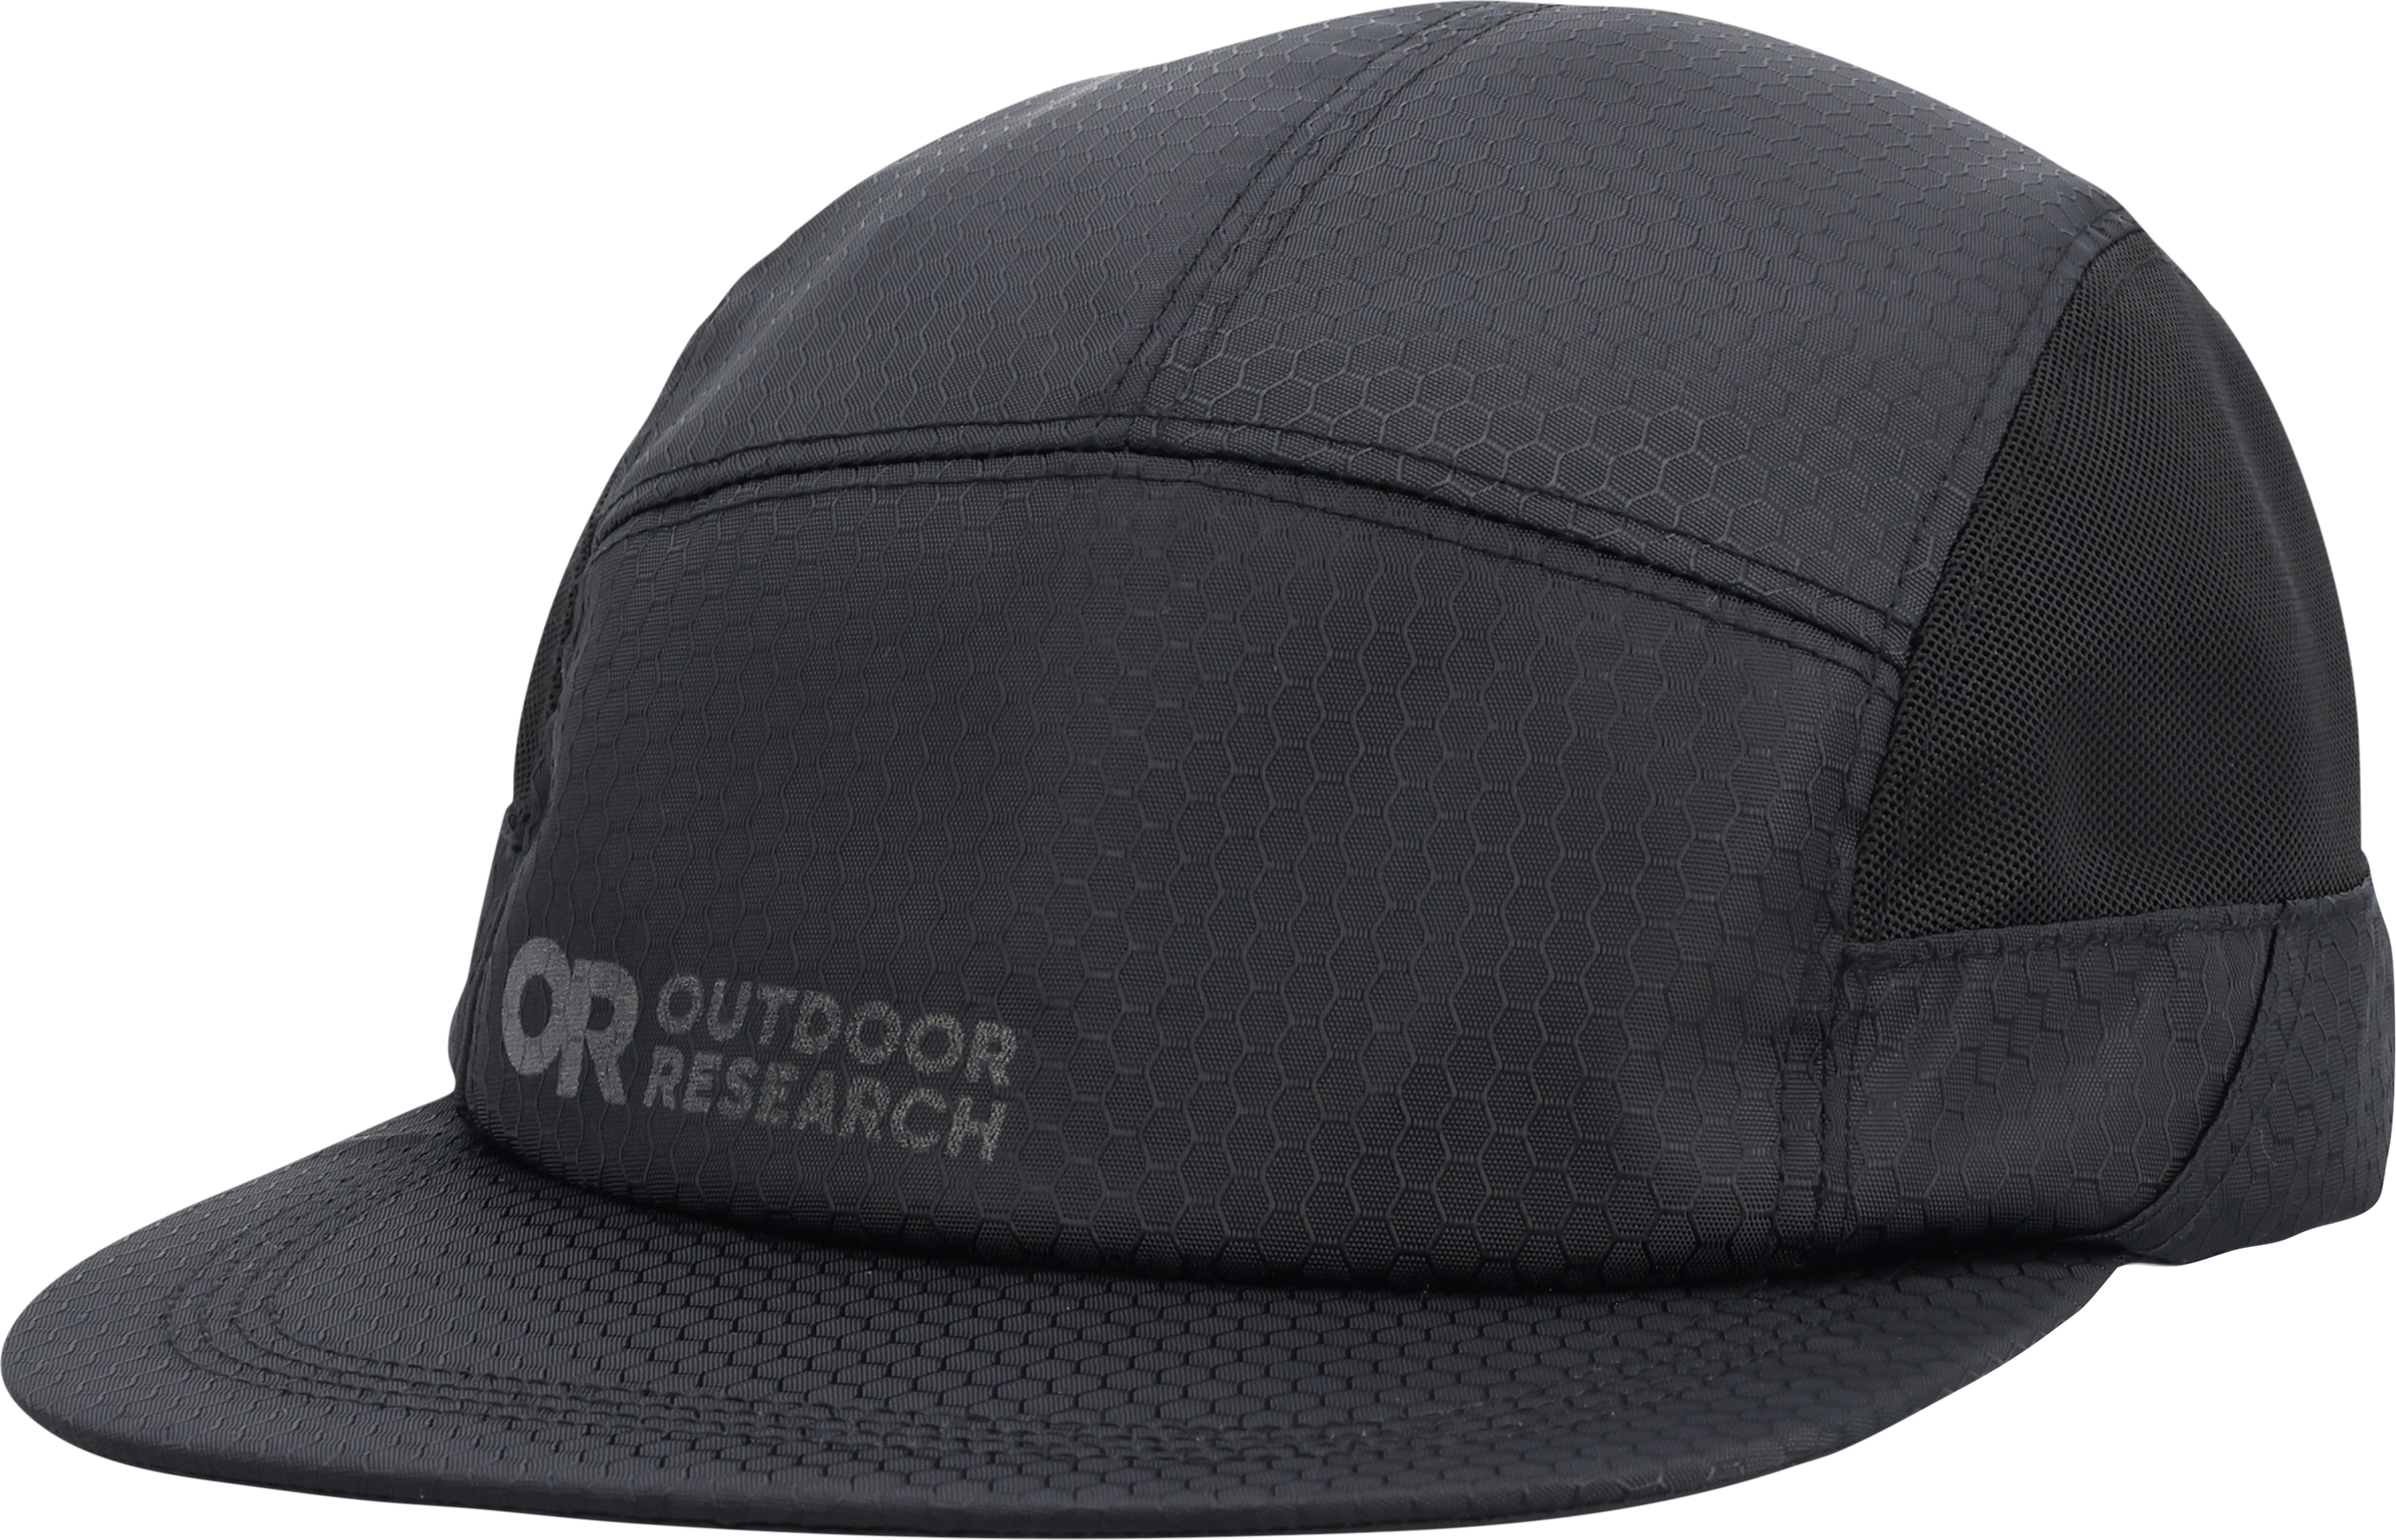 Outdoor Research Outdoor Research Men's Ski Tour Cap Black OneSize, Black